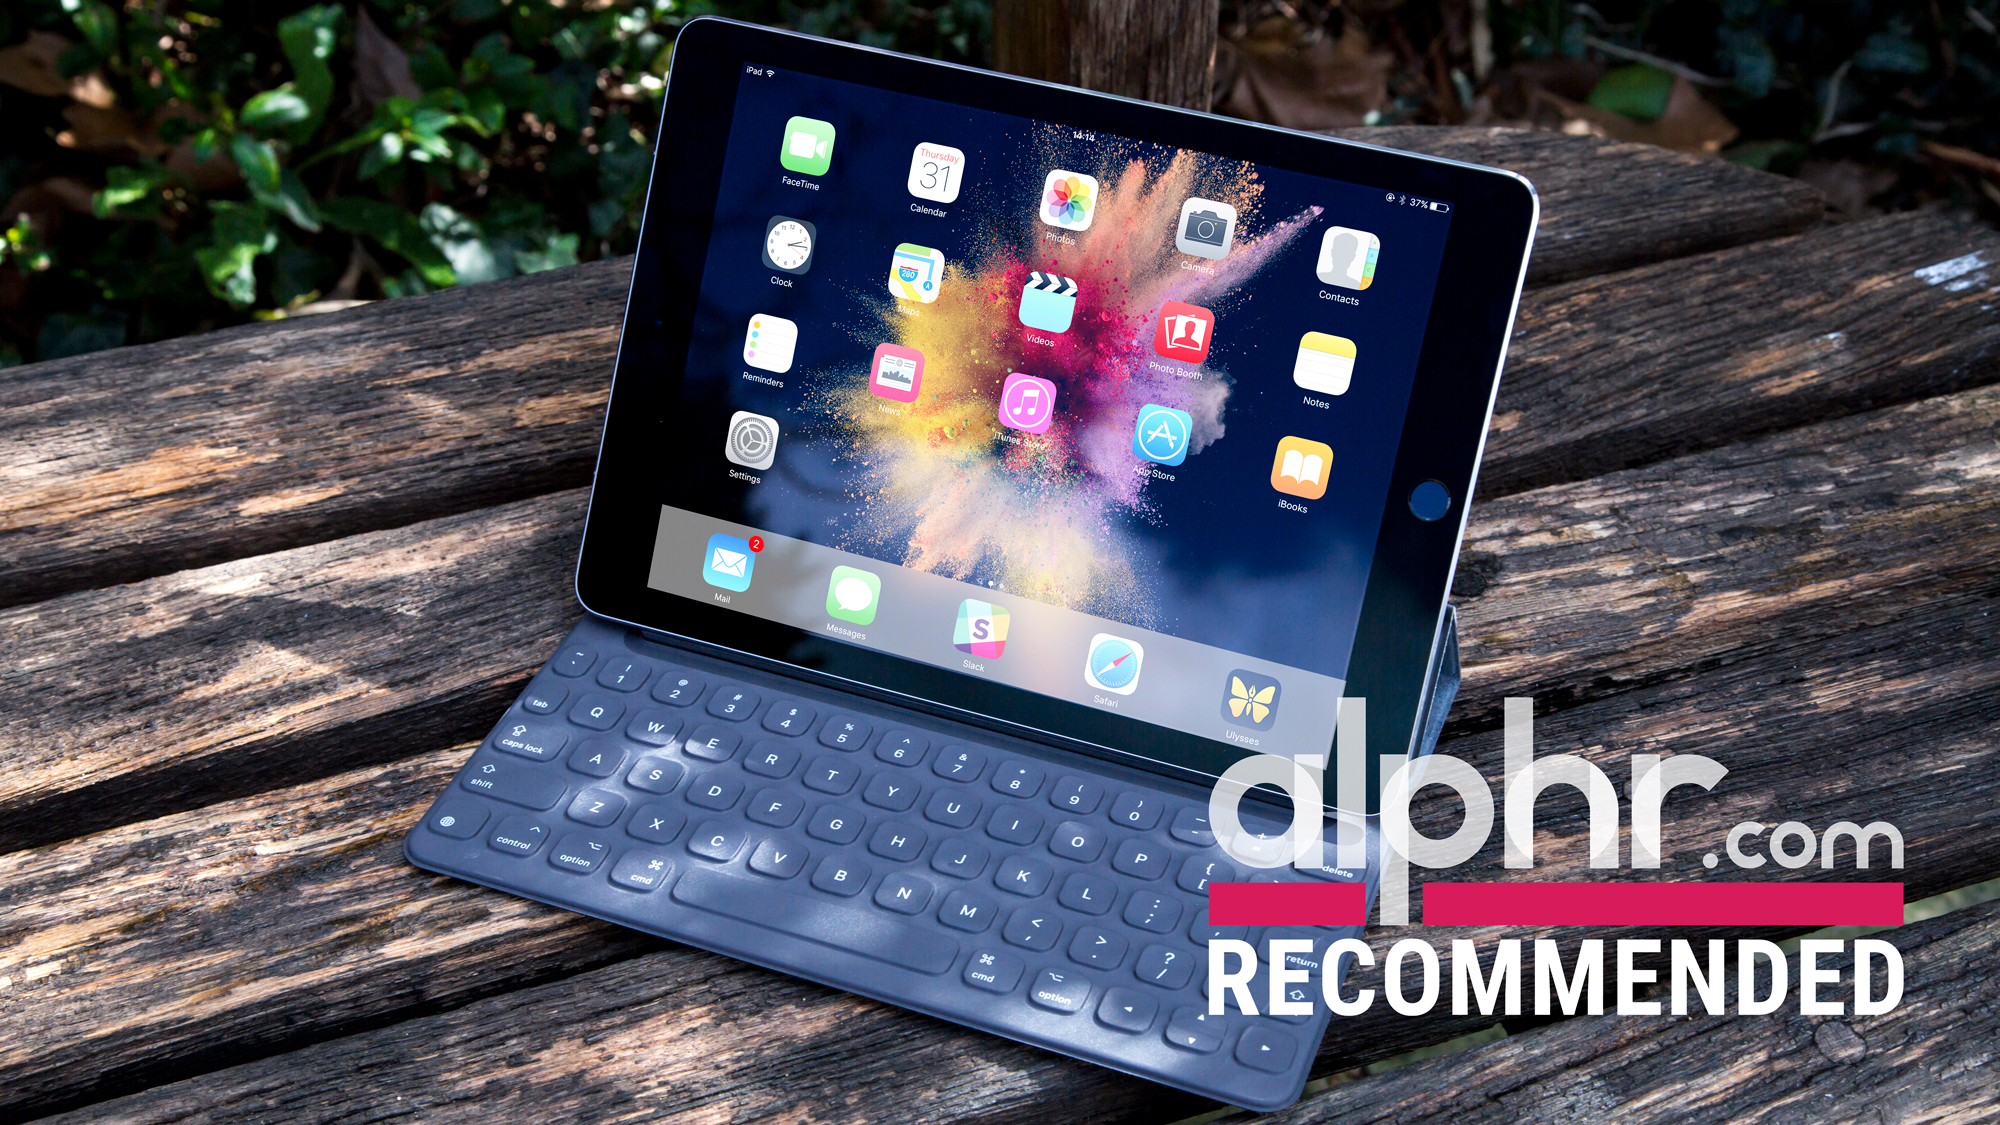 Apple iPad Pro 9.7 review: A little less pro for a little less